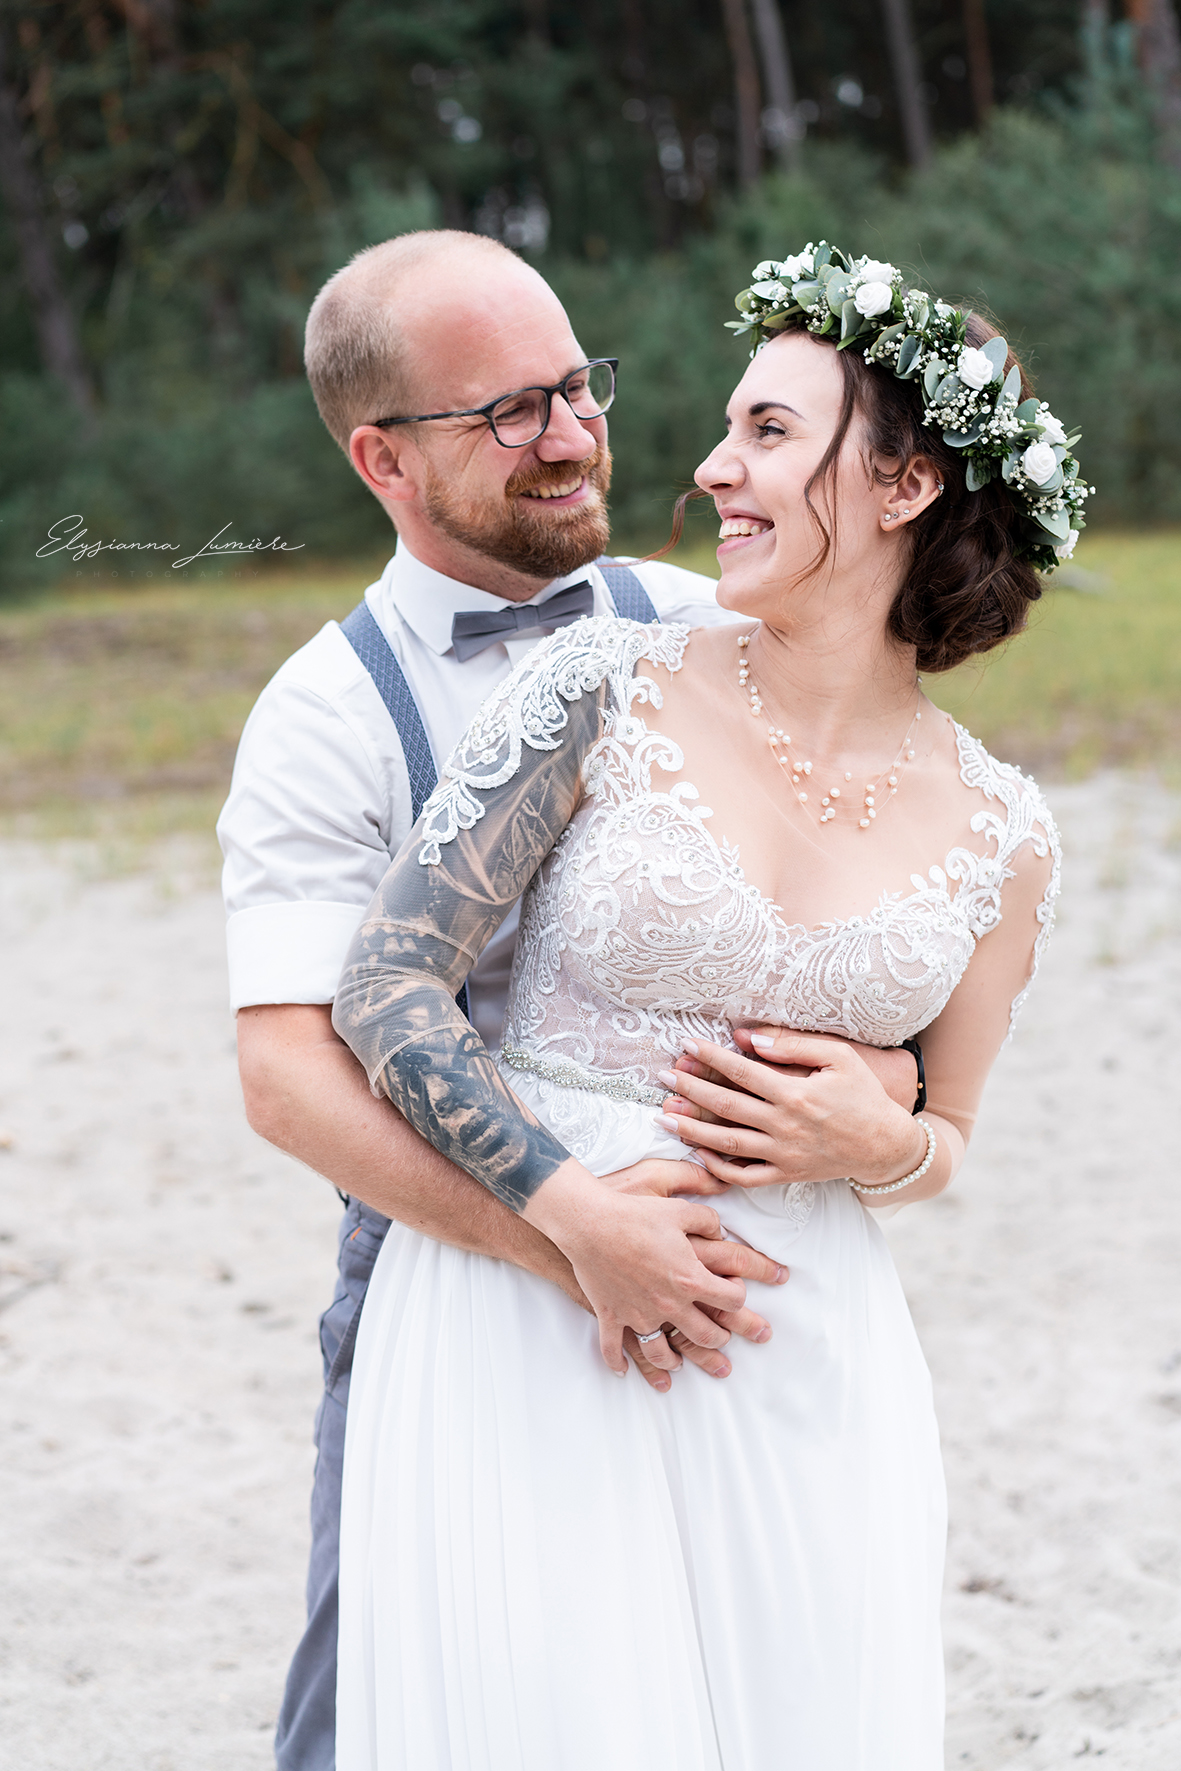 Lachendes Brautpaar bei den Hochzeitsfotos Weddingshooting in den Dünen